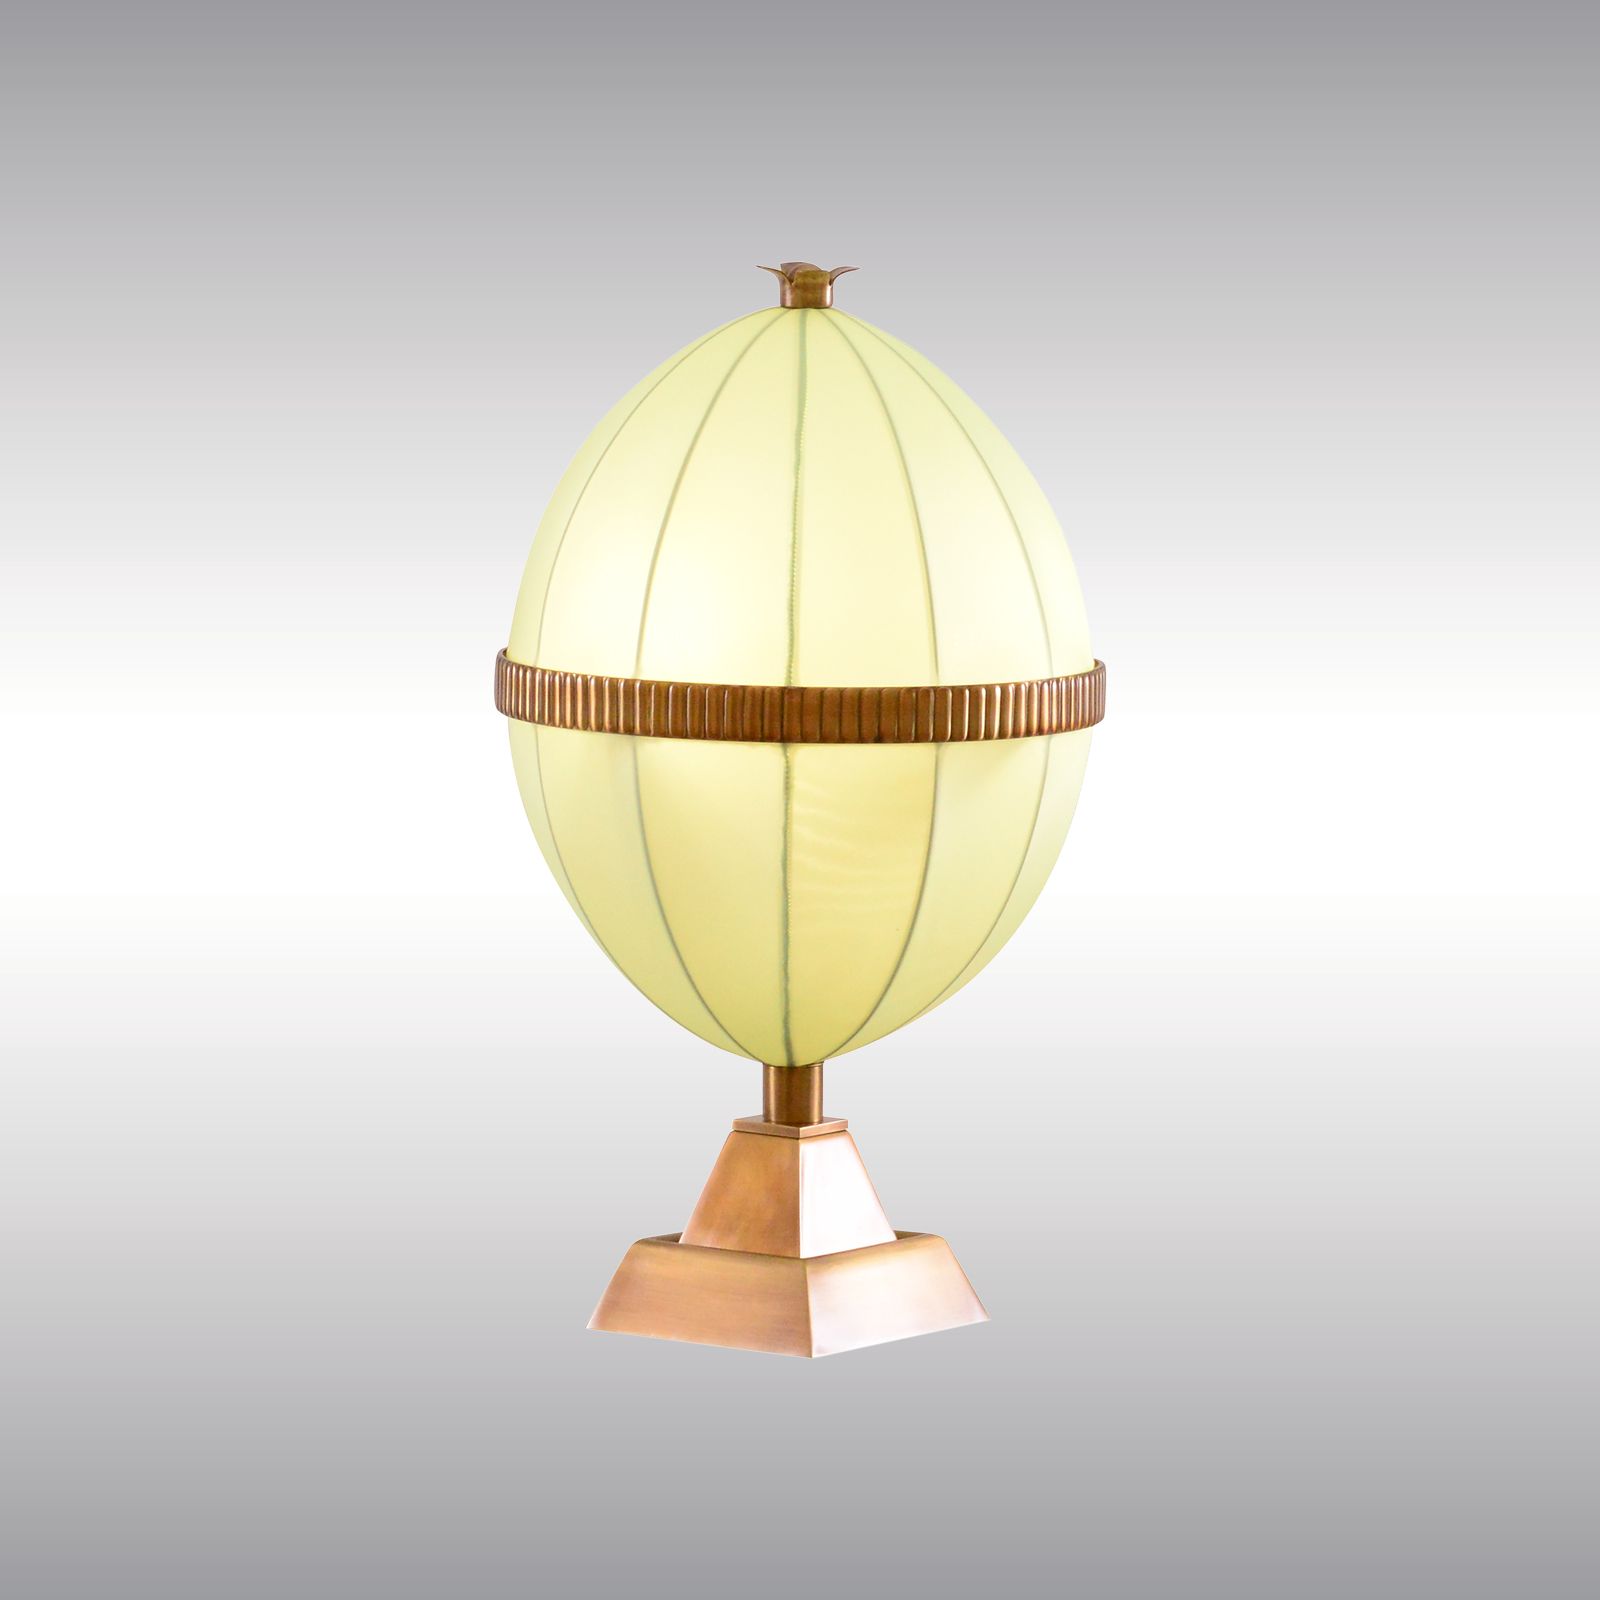 WOKA LAMPS VIENNA - OrderNr.: 21401|Moldauer Table - Design: Josef Hoffmann